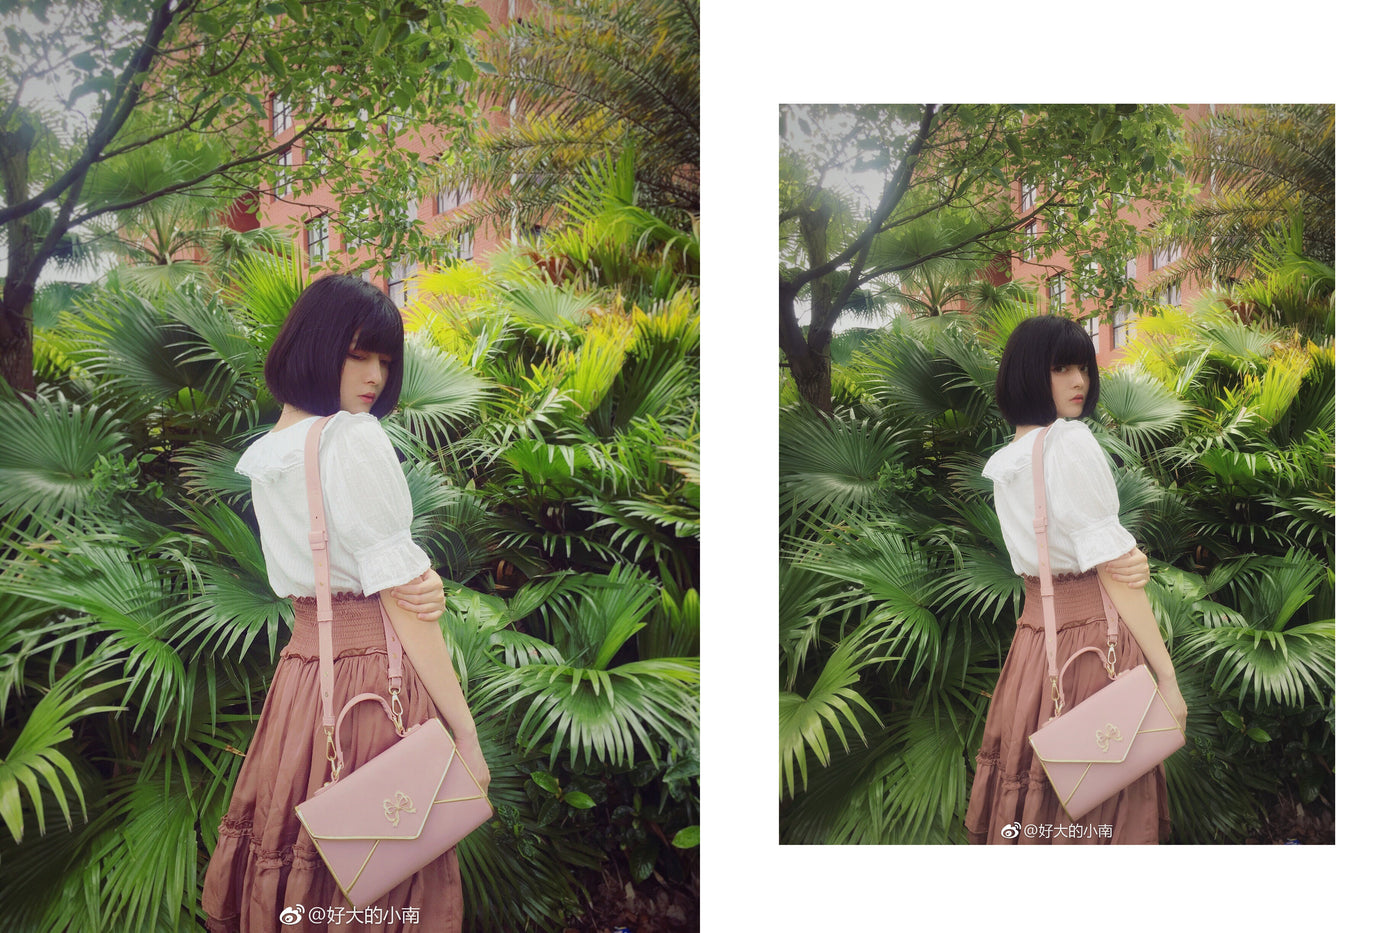 BerryQ~Vintage Lolita Cla~Fashionable Lolita Handbags Multicolors   